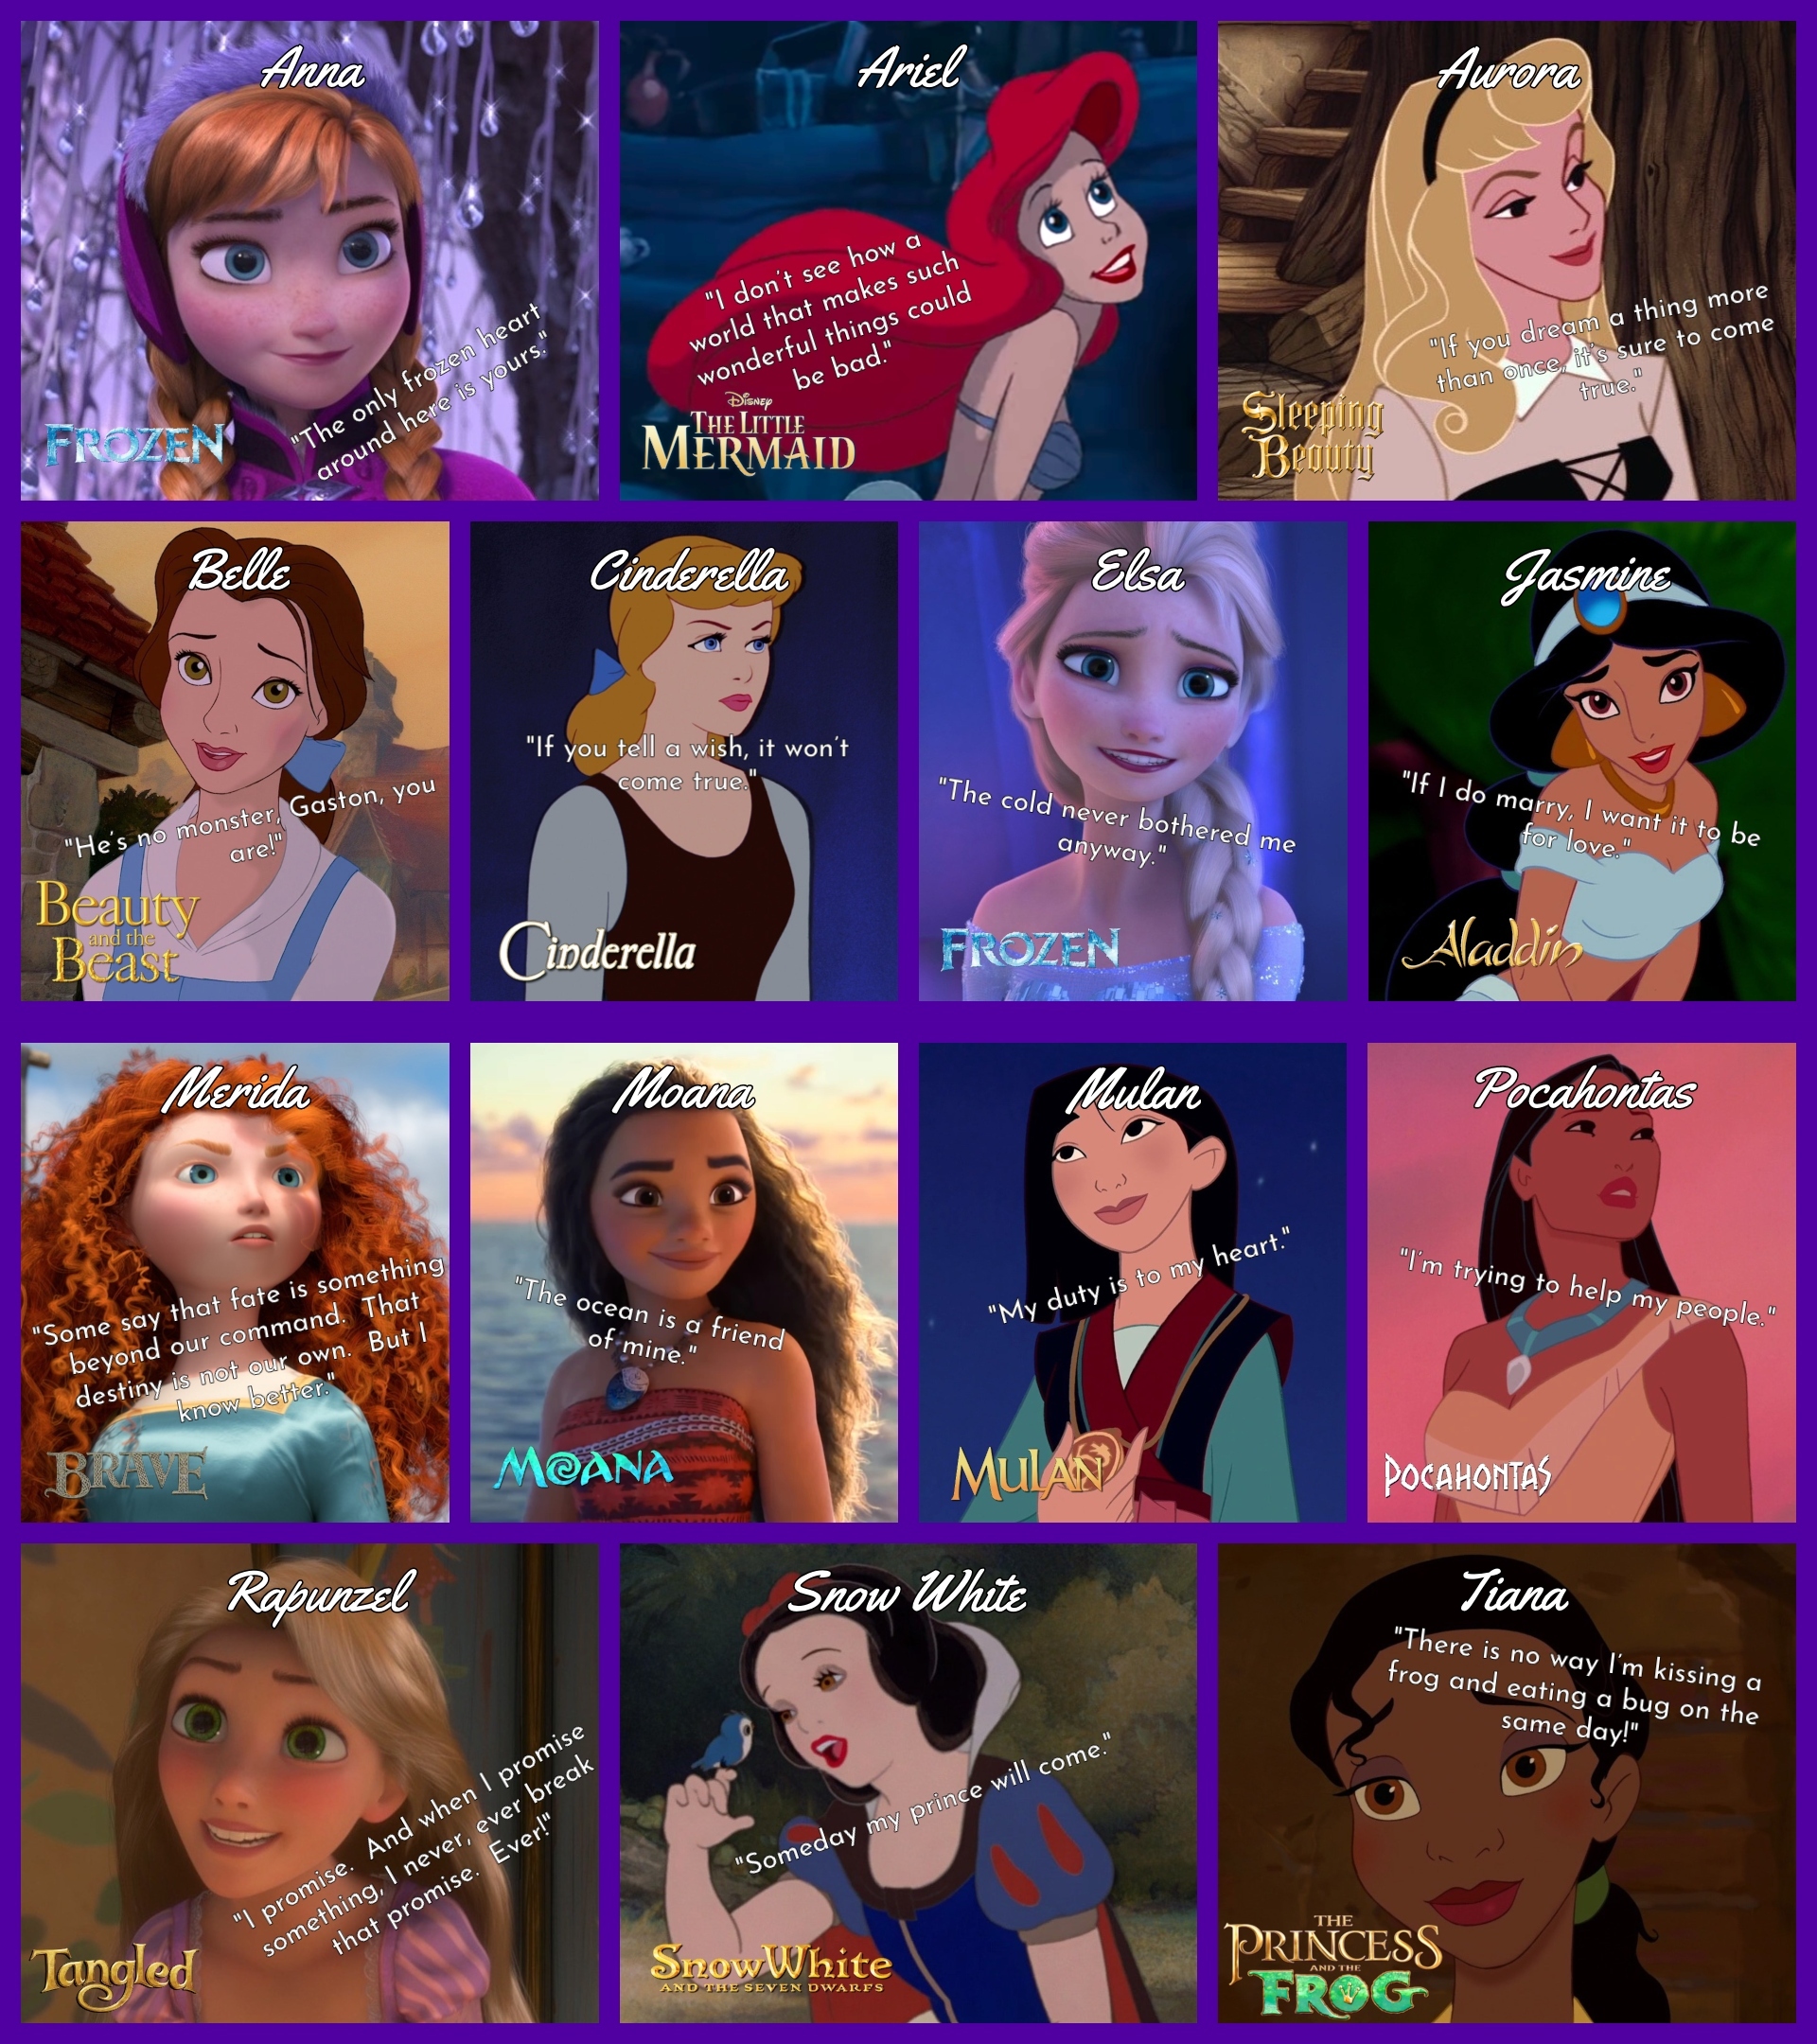 blogshubspot.com  Disney princess quotes, Disney princess movies